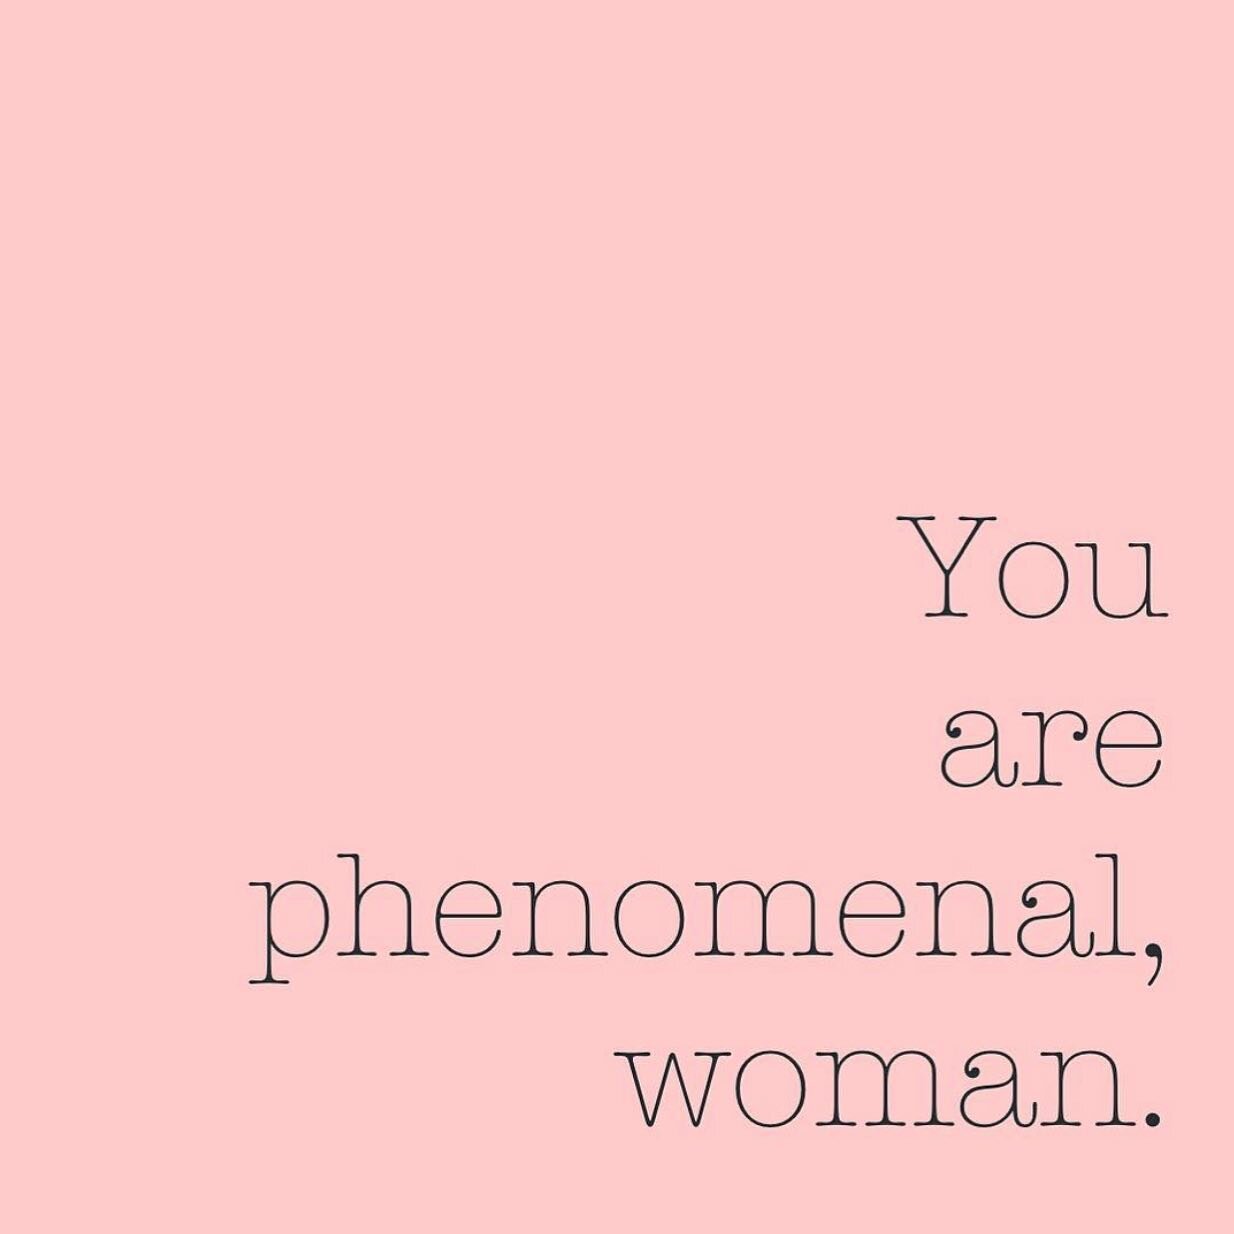 I am a Phenomenal woman, Phenomenal woman that&rsquo;s me - Maya Angelou

Happy International Woman&rsquo;s Day 💐

#artandprosecco #internationalwomensday #female #feminism #feminist #workofart #artlover #womensupportingwomen #womanartist #femaleemp